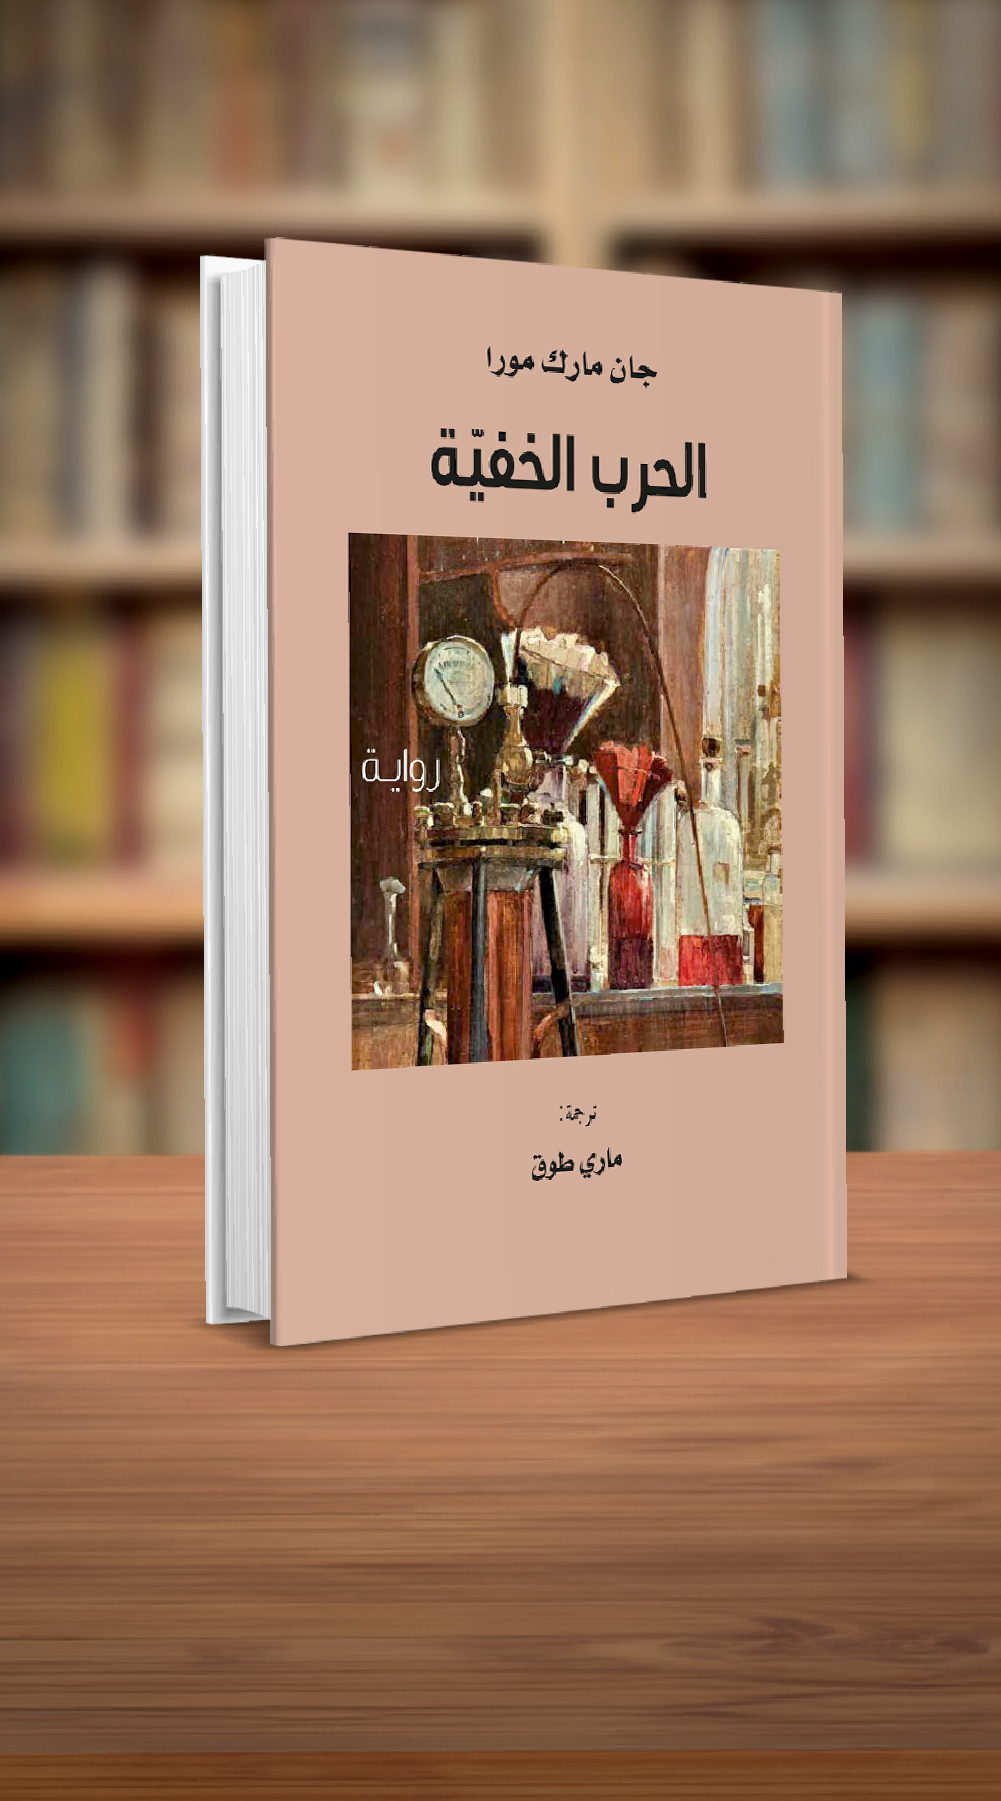 Abu Dhabi Arabic Language Centre publishes ‘La guerre insaisissable’, a Novel by French Author Jean-Marc Moura